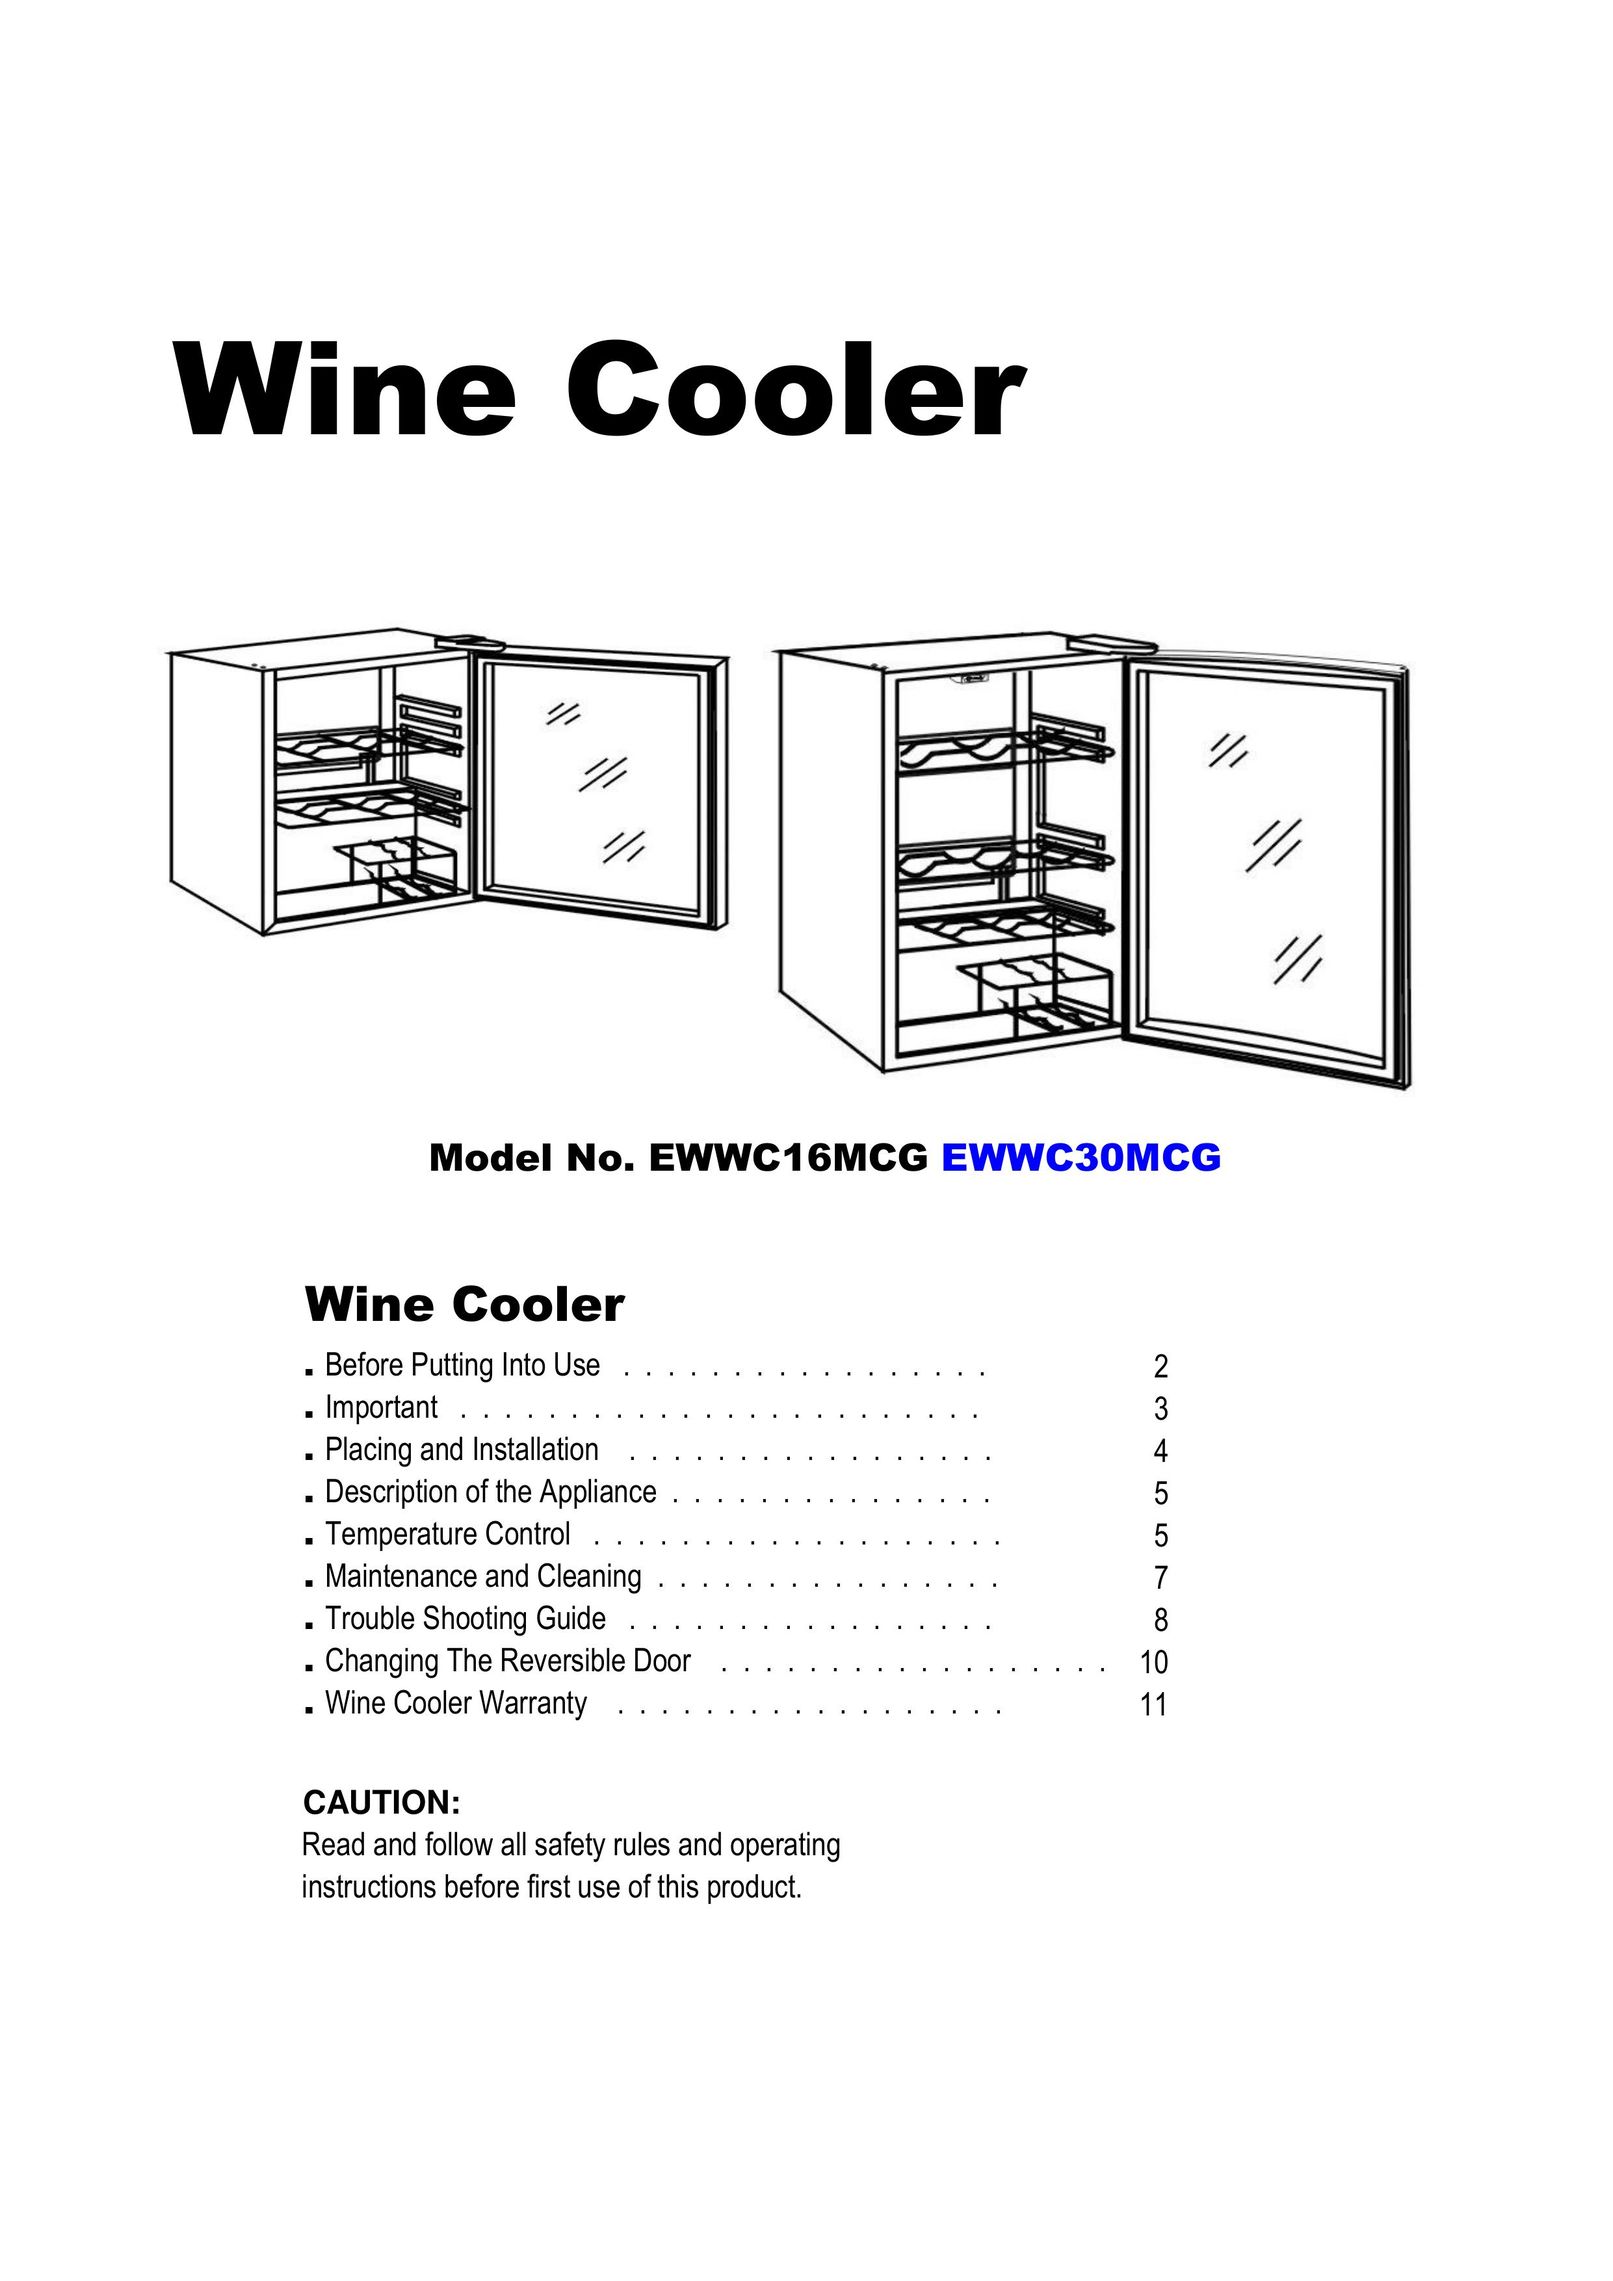 Magic Chef EWWC30MCG Beverage Dispenser User Manual